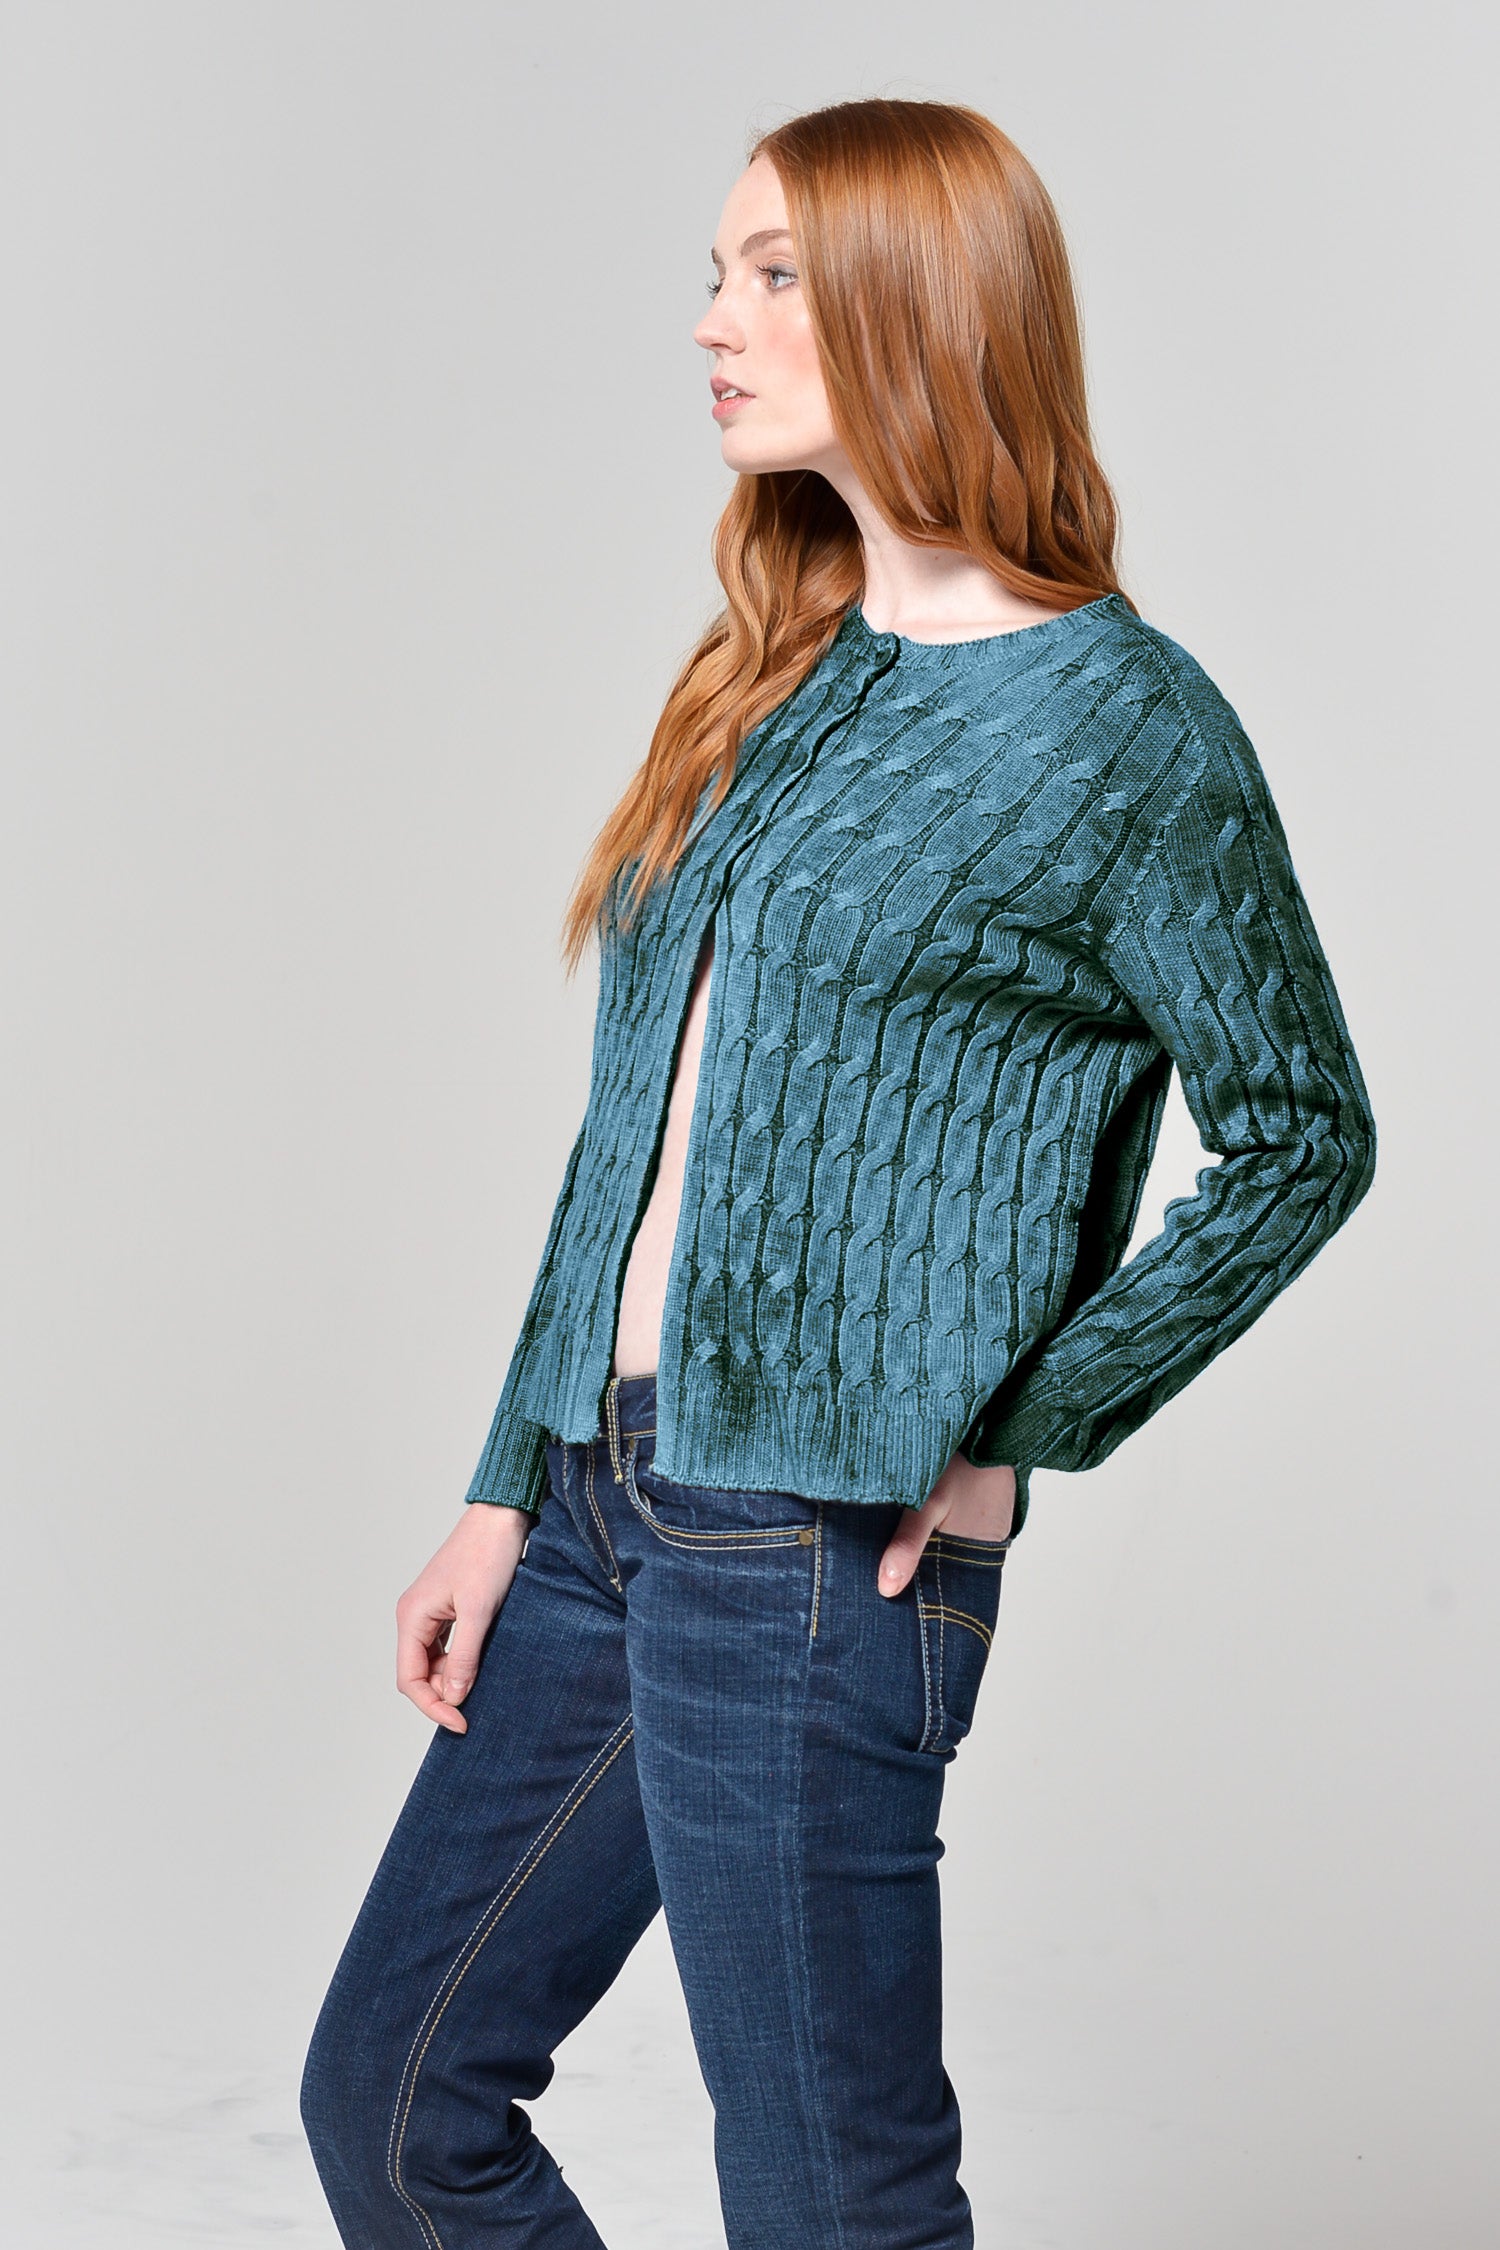 Dores Rock Art Sweater - Olivinite